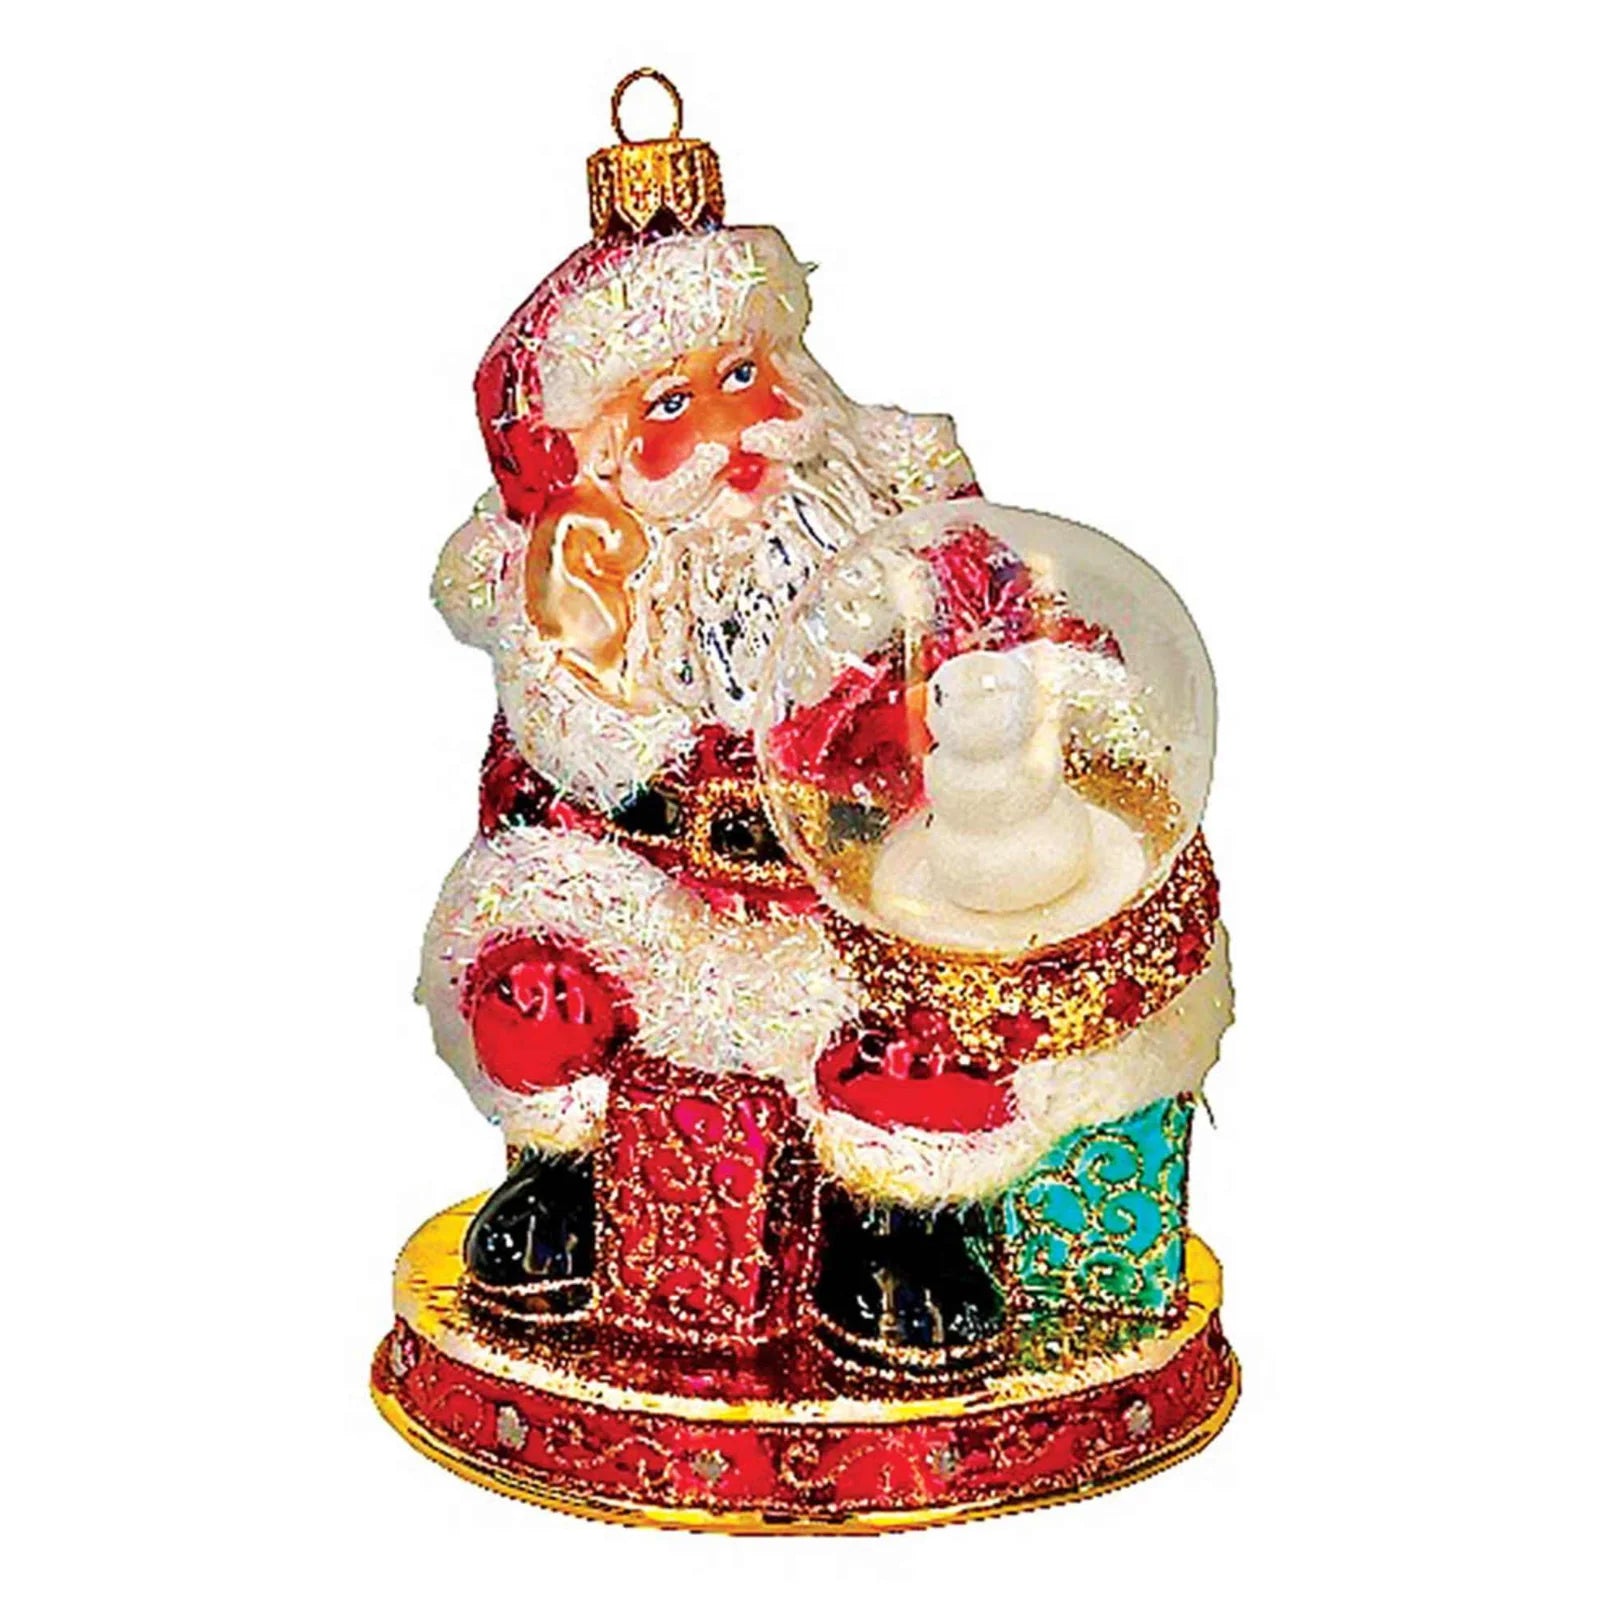 Heartfully Yours Winter Watcher Christmas ornament Christopher Radko Santa Claus 